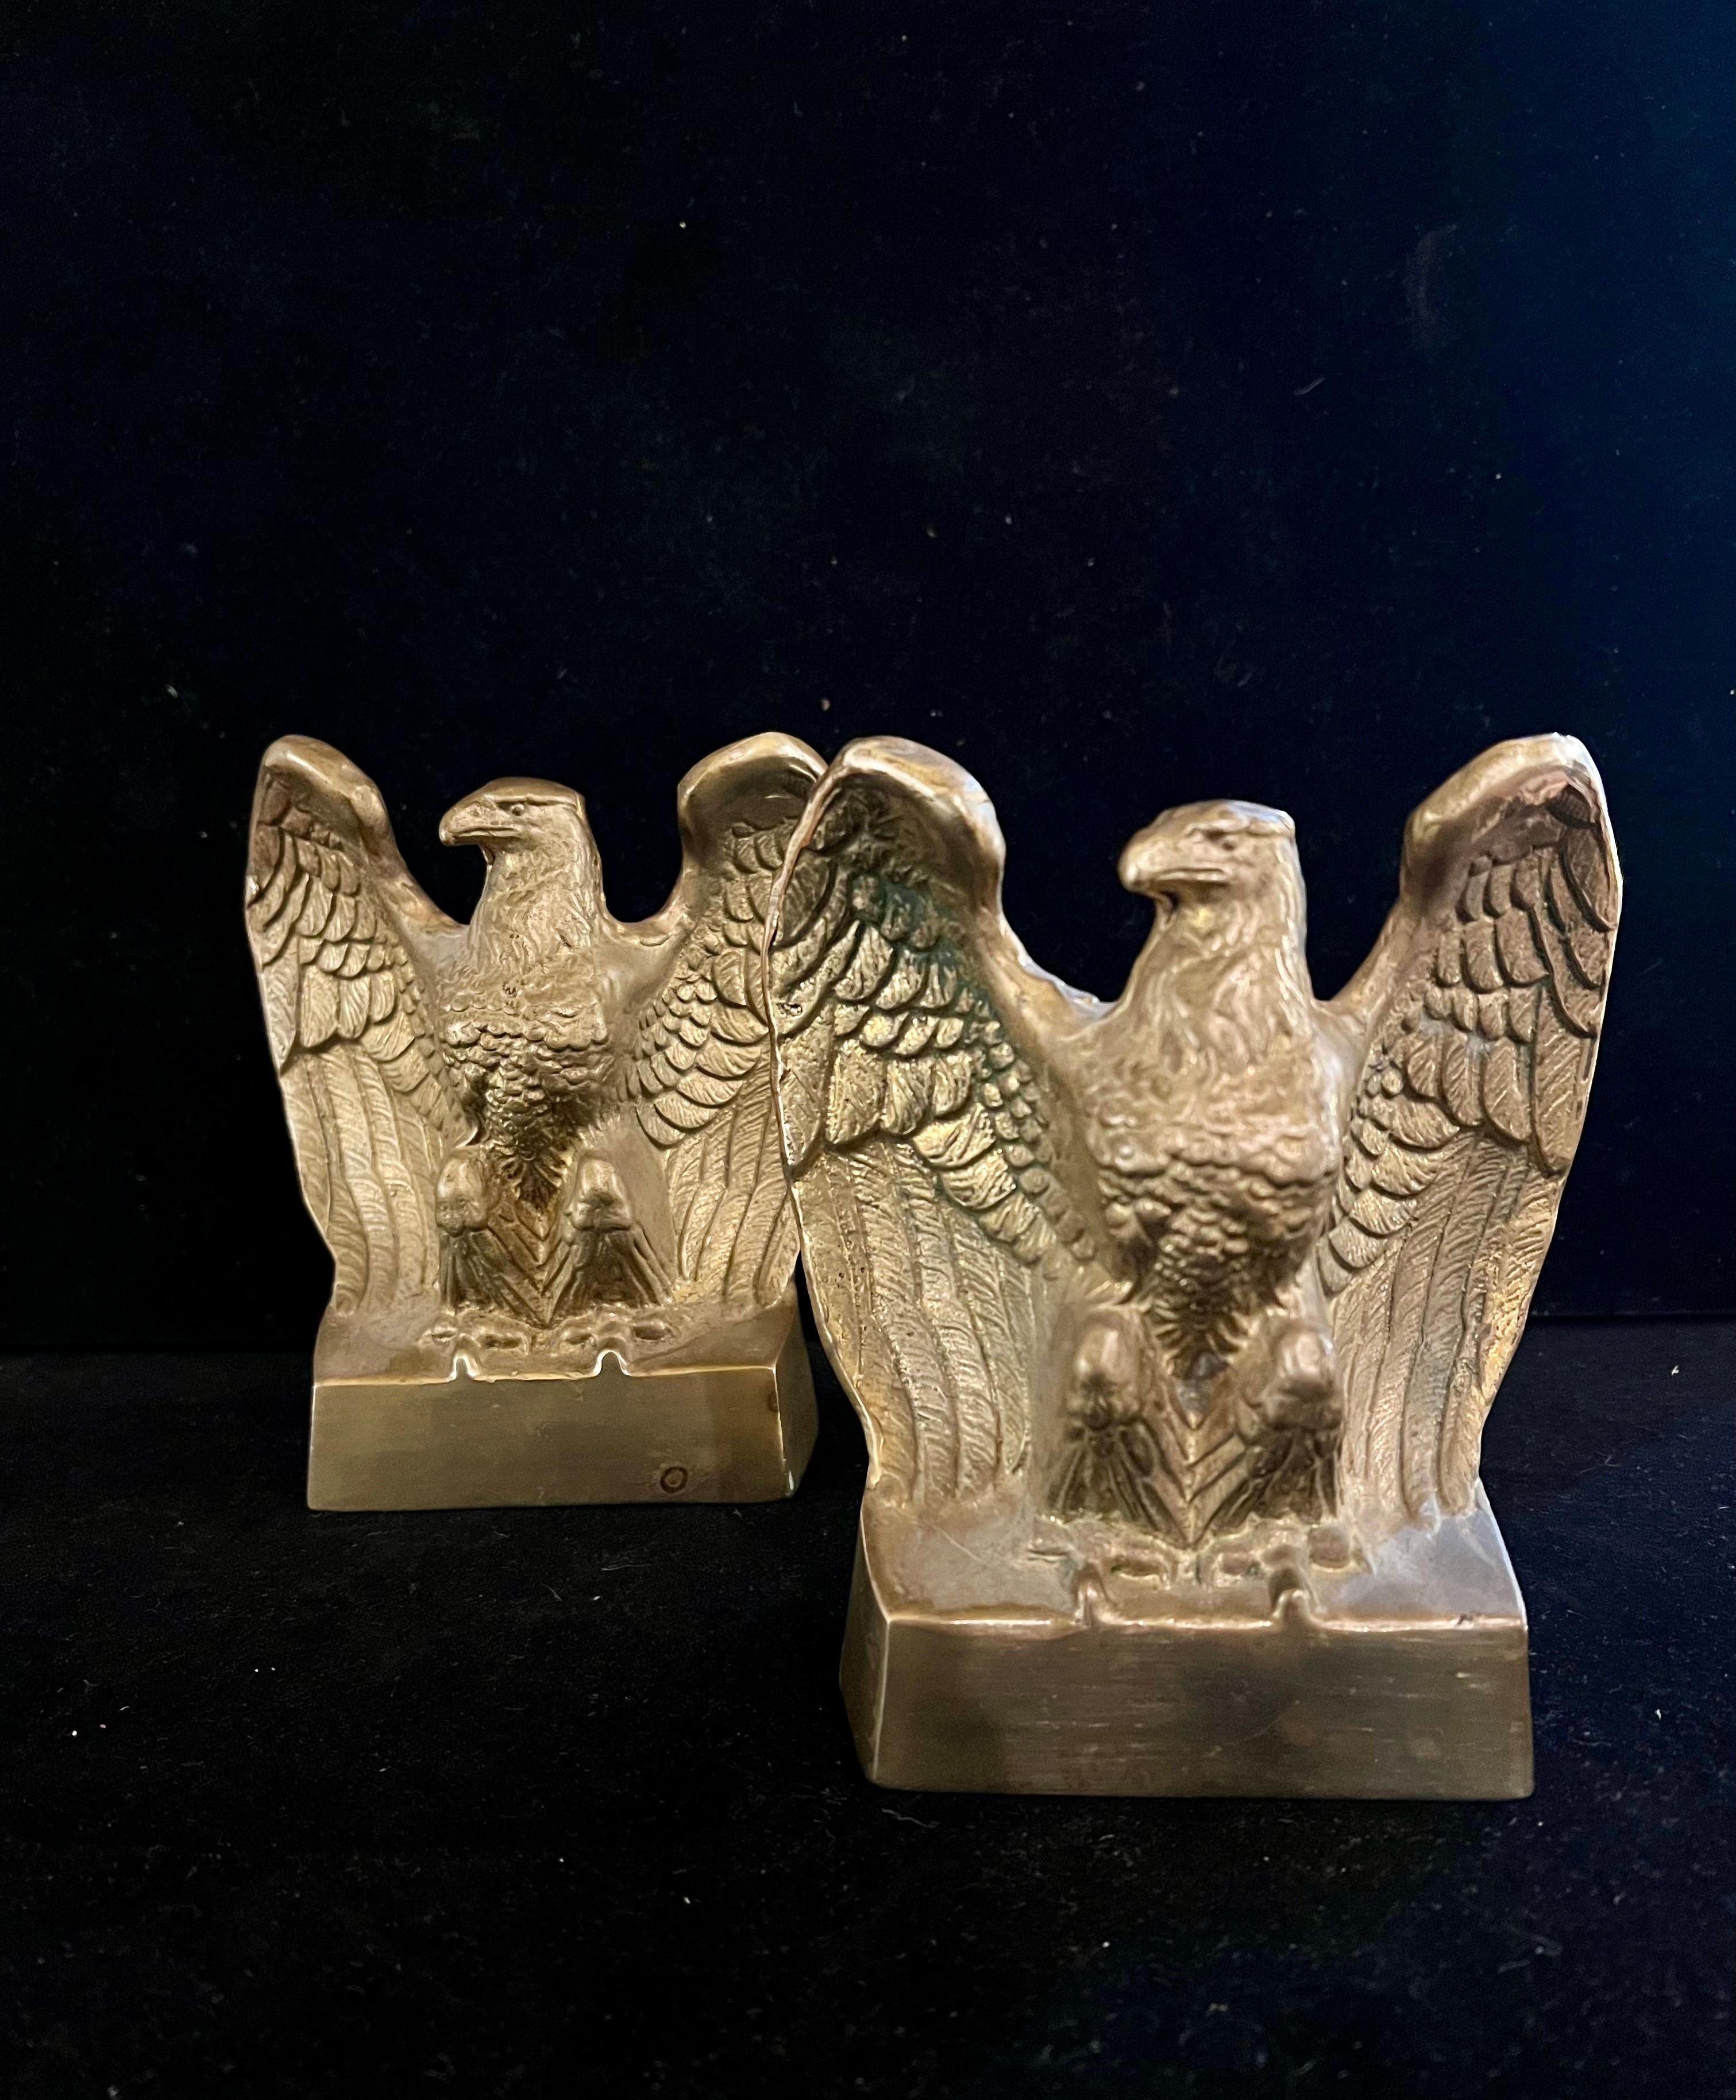 Bronze-patinated American bald eagle bookends circa 1950s. Beautiful elegant pair.